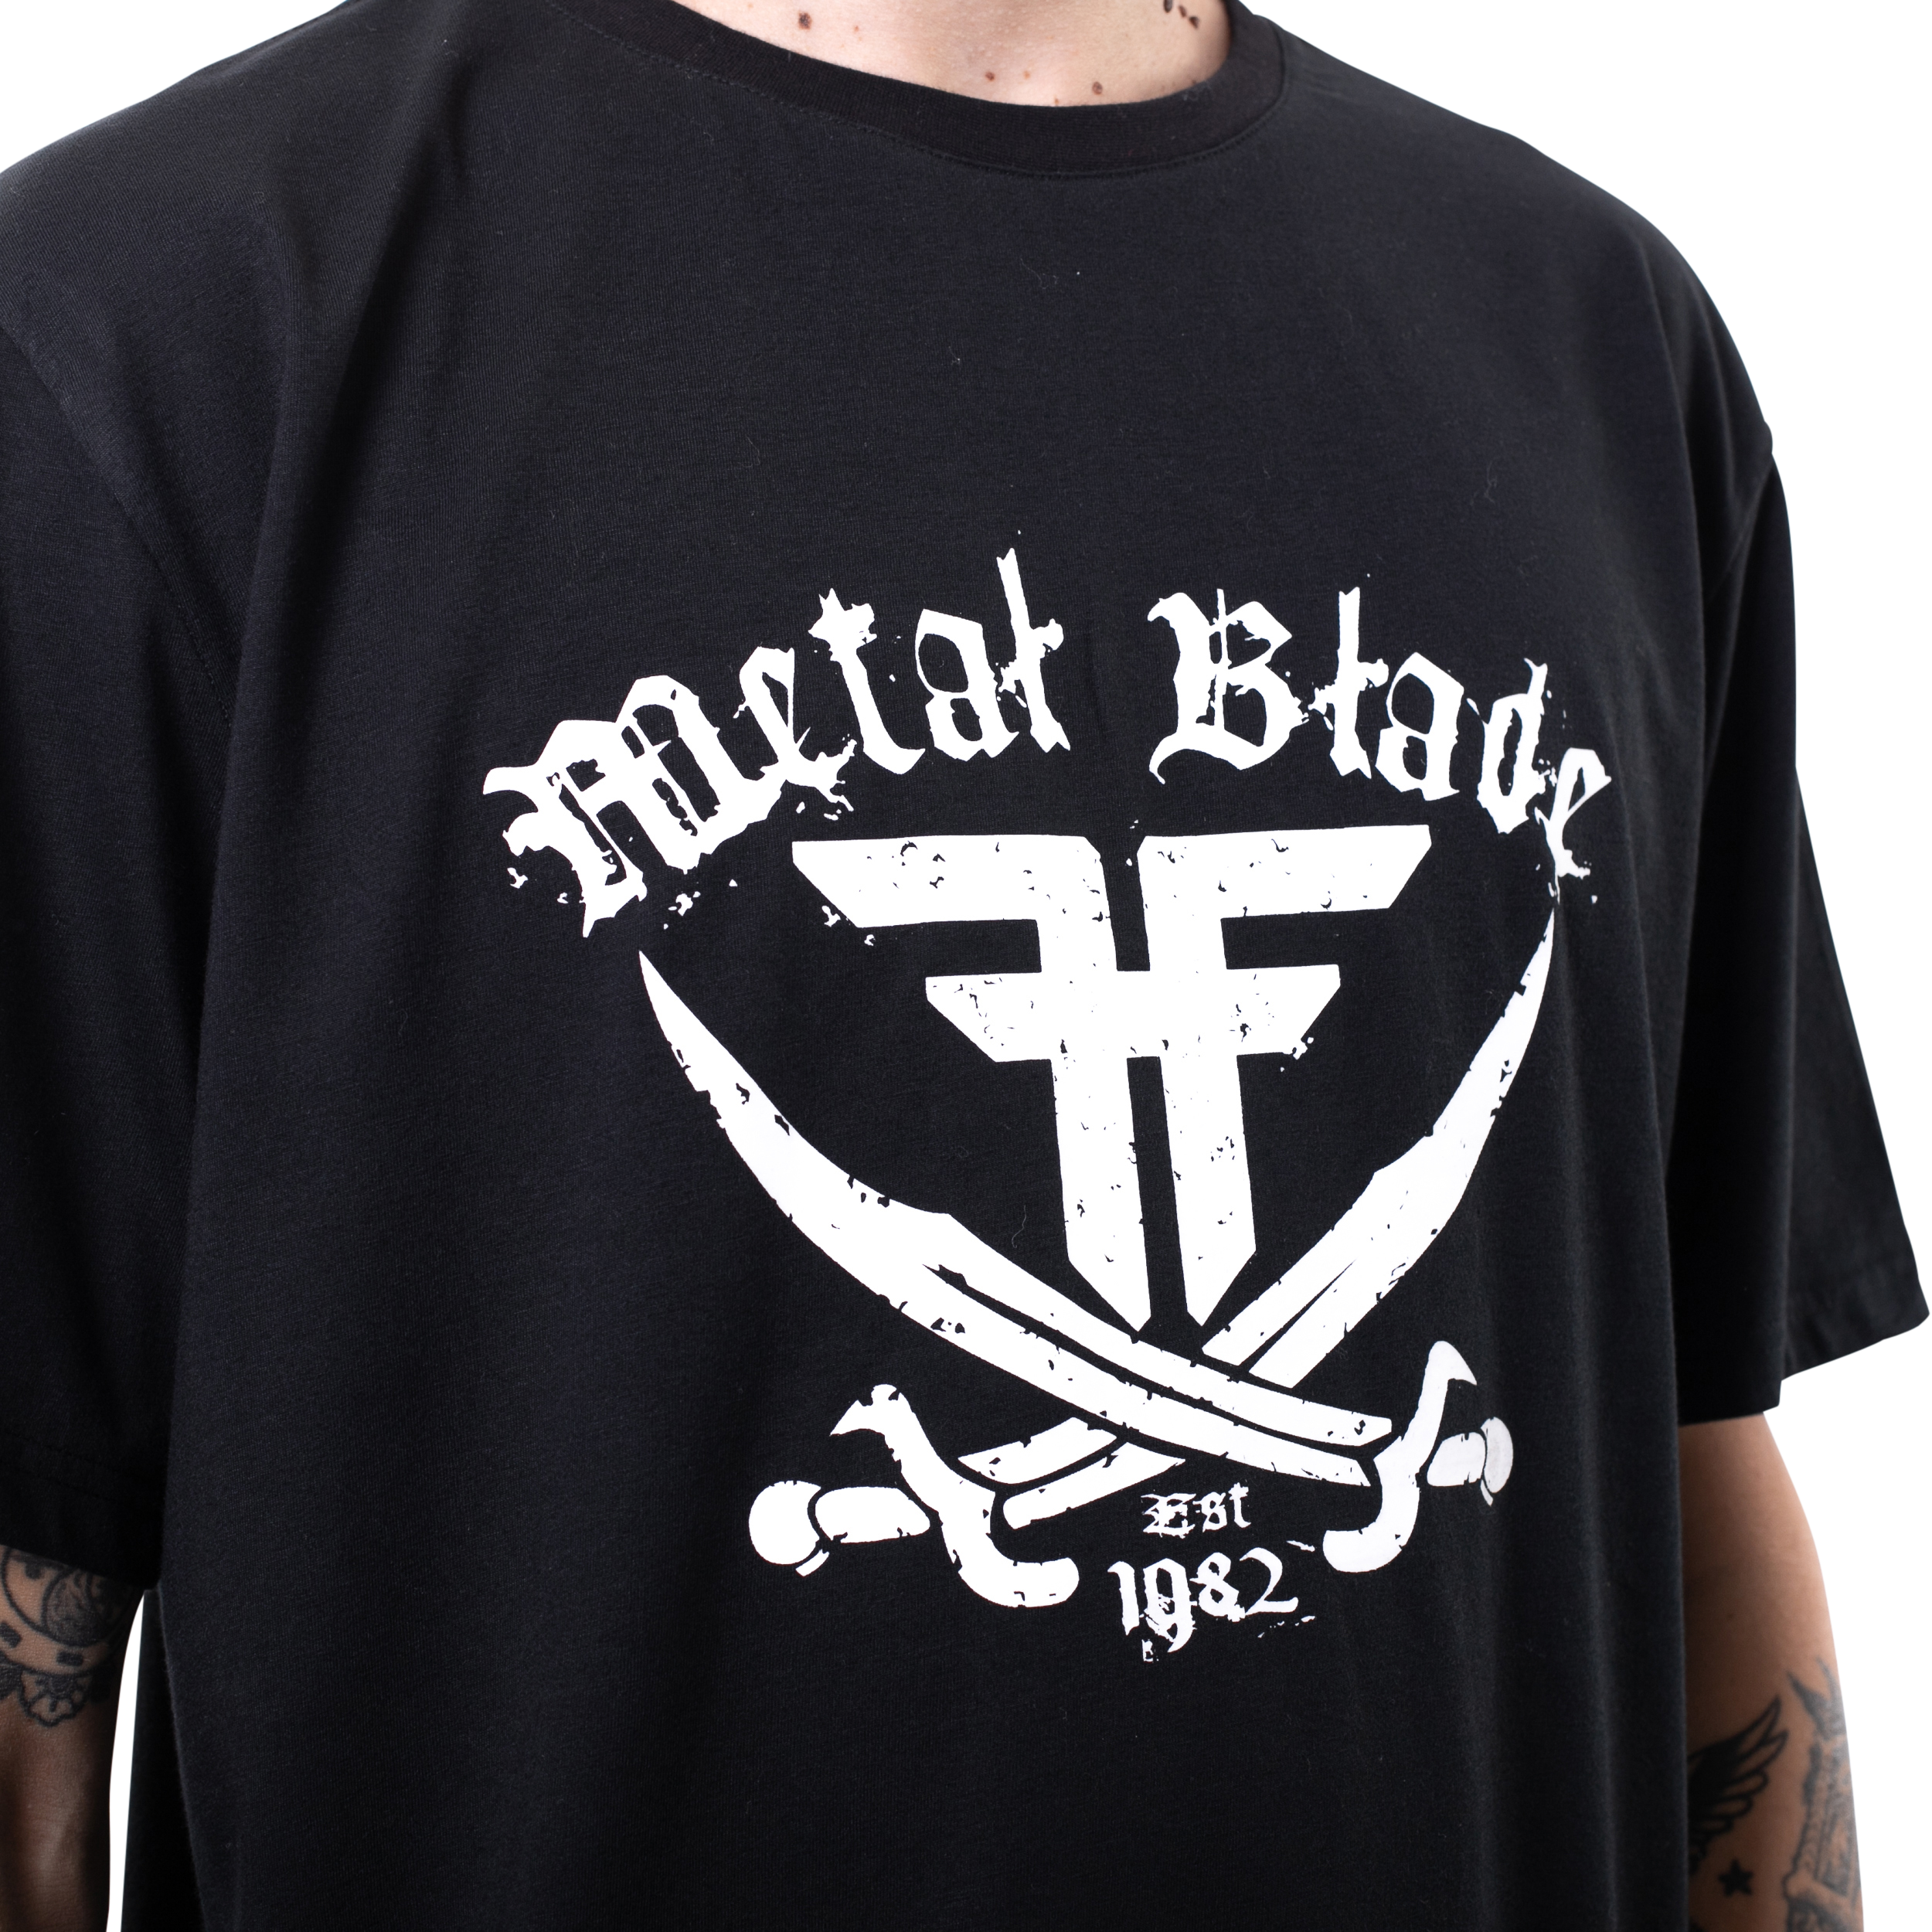 Metal Blade Pirate tee - Black/White